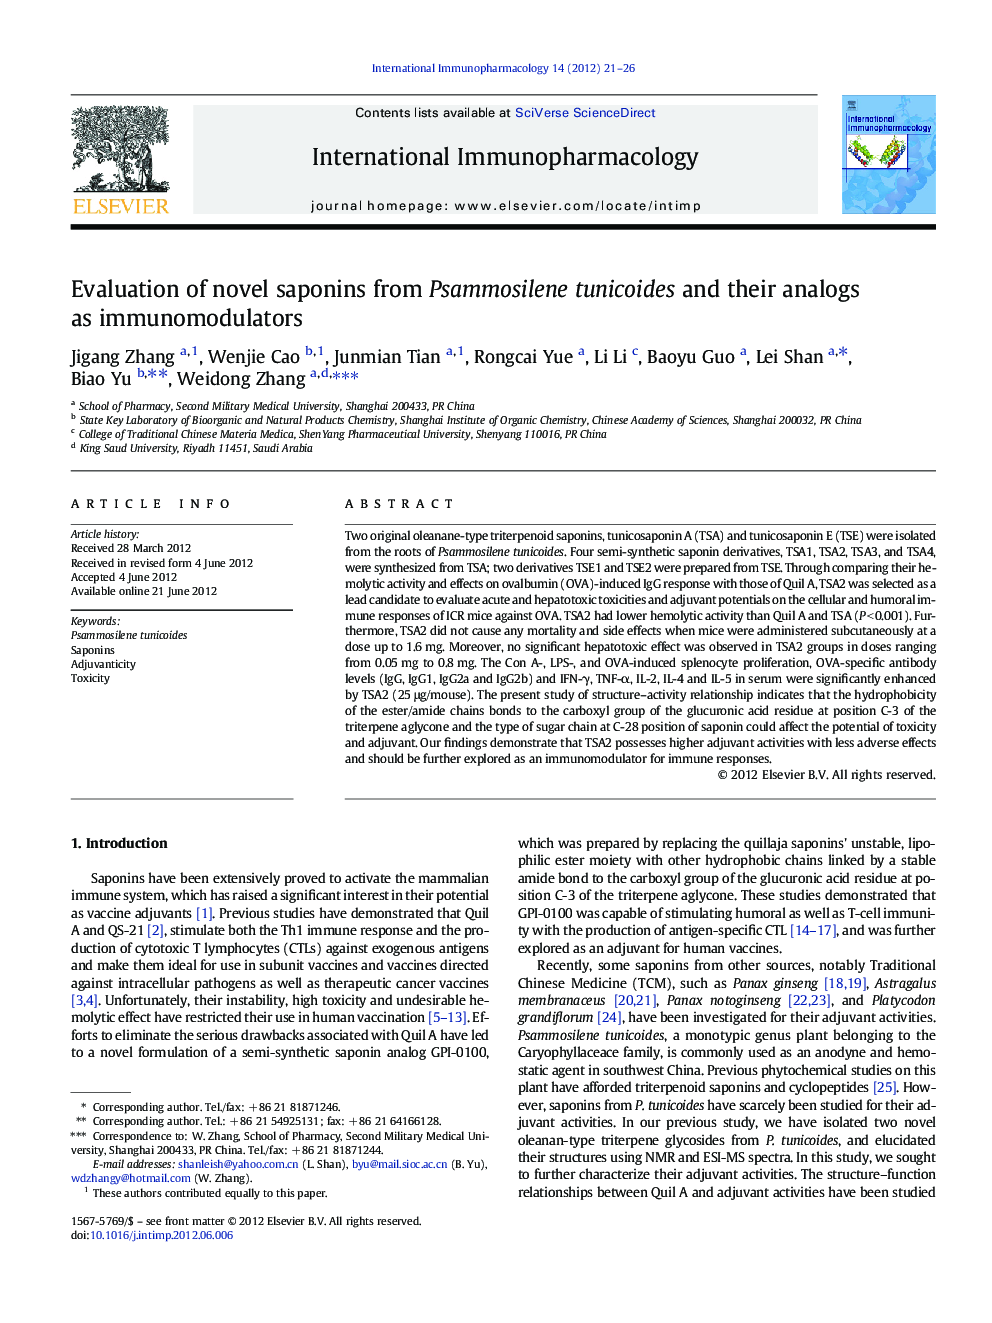 Evaluation of novel saponins from Psammosilene tunicoides and their analogs as immunomodulators